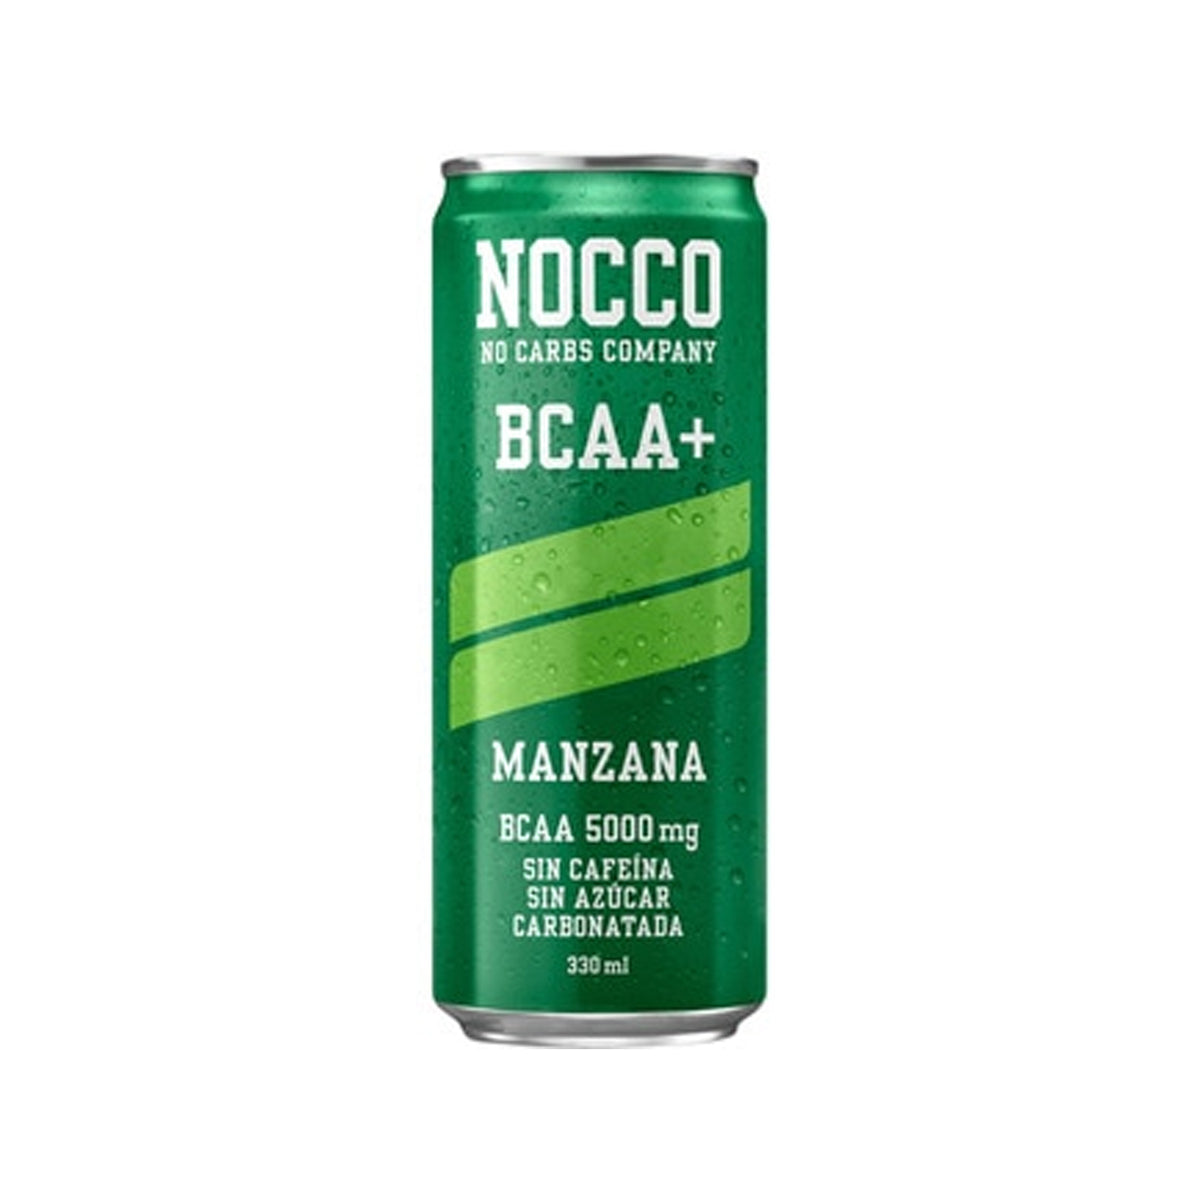 NOCCO BCAA+ MANZANA 330ML